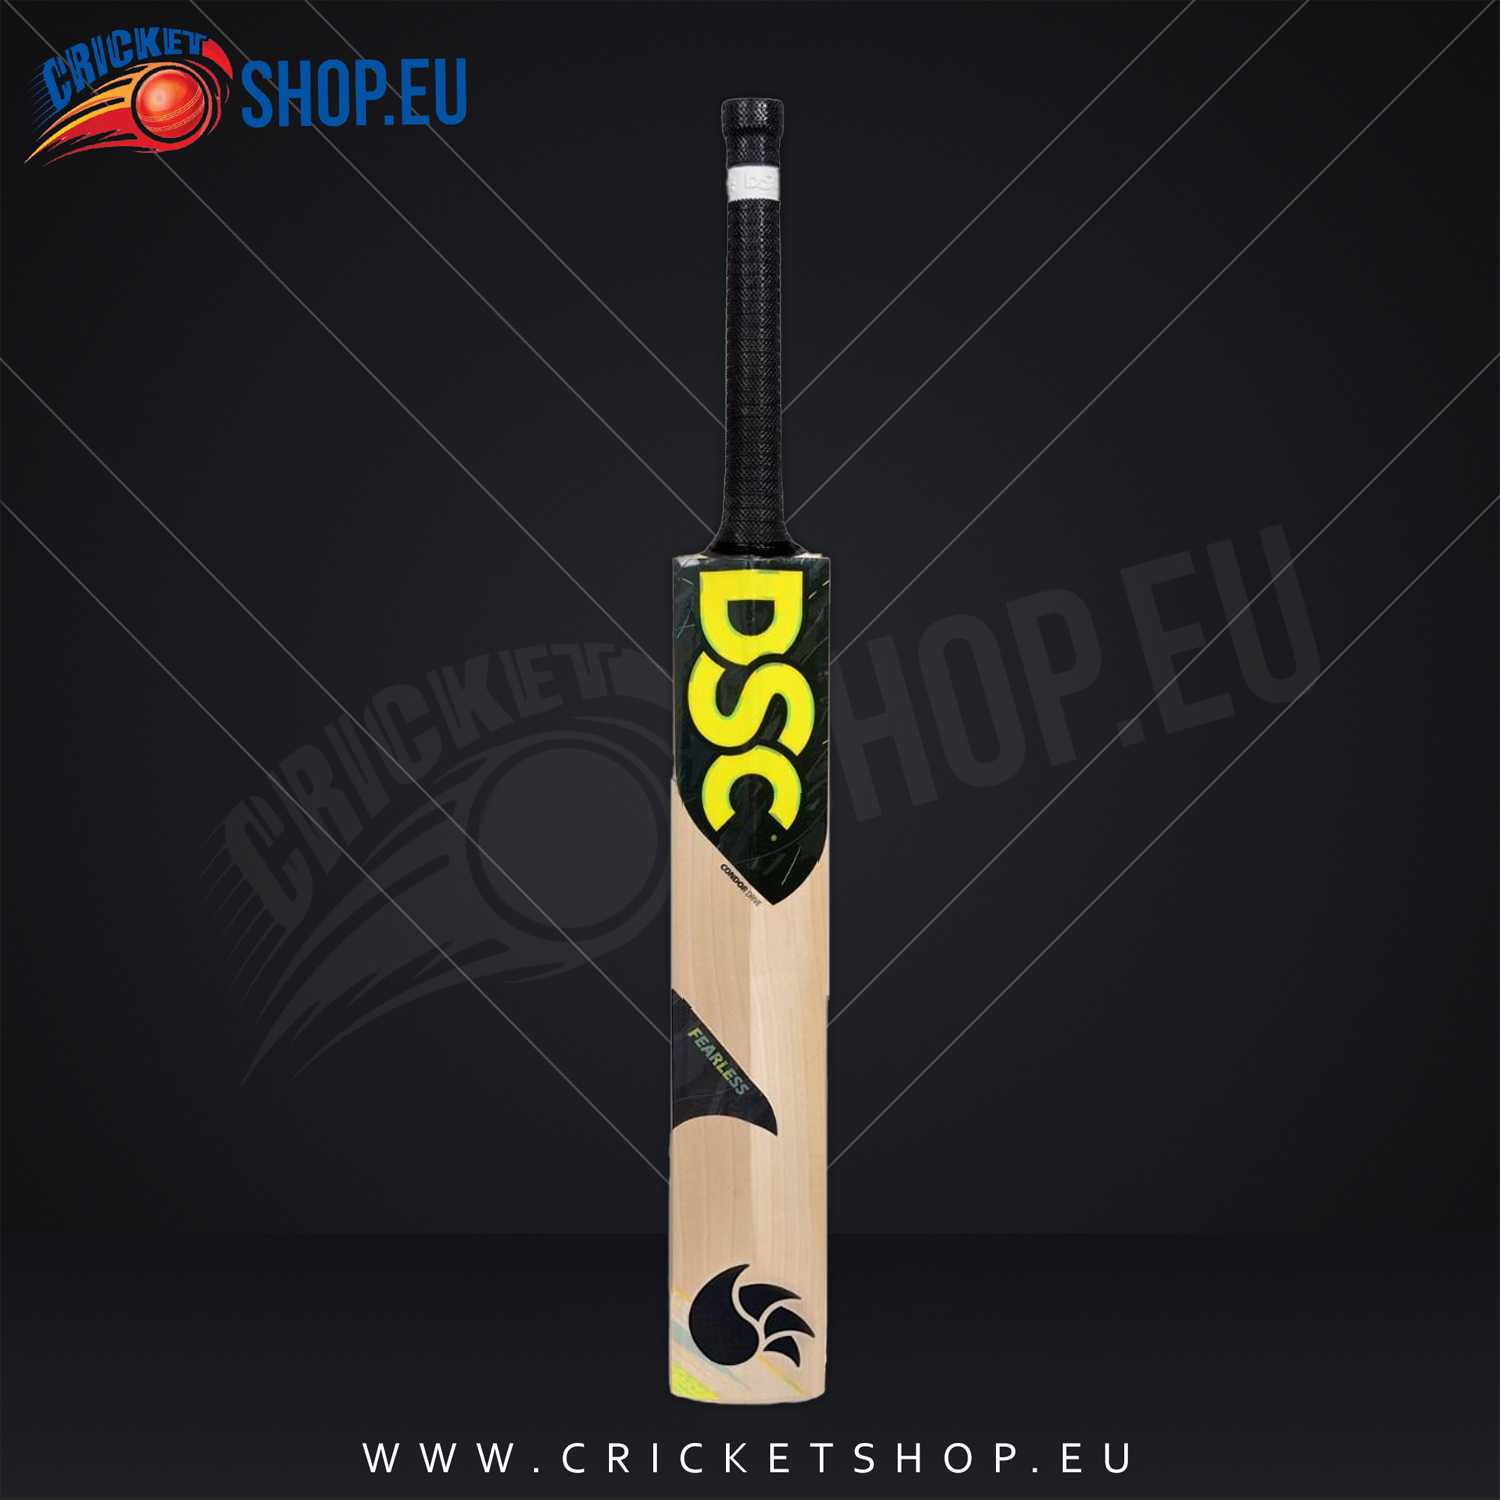 DSC Condor Drive English Willow Cricket Bat